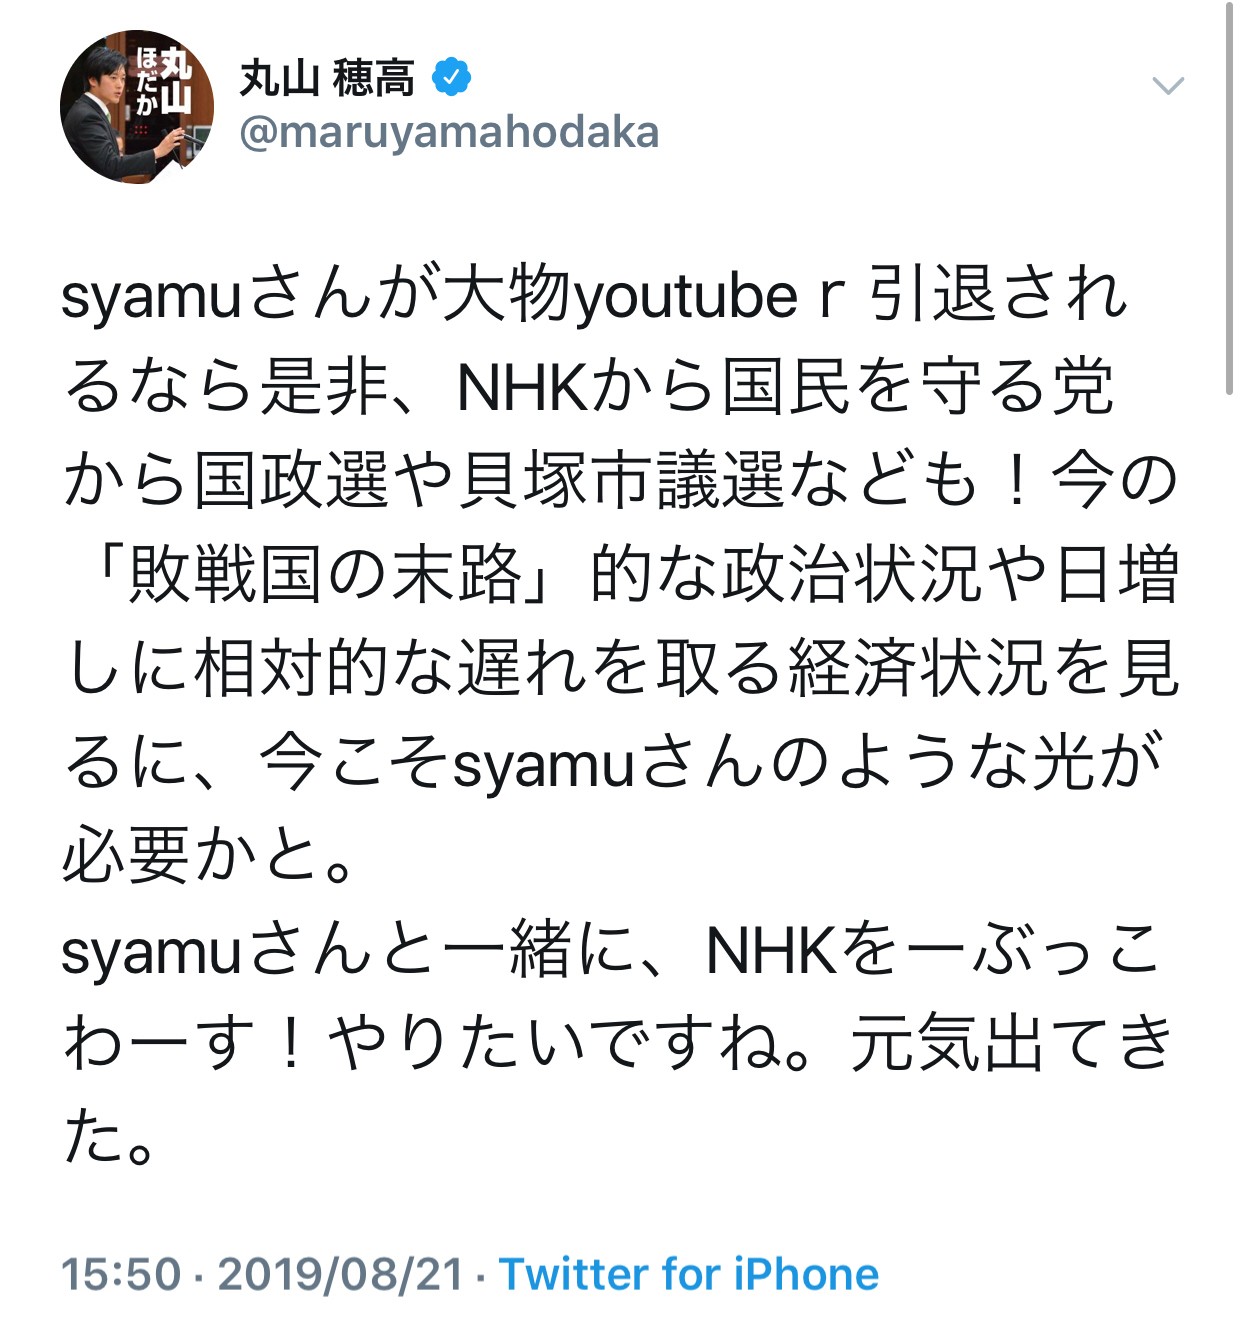 [Breaking news] N country, syamu-san request to run to Kaizuka City